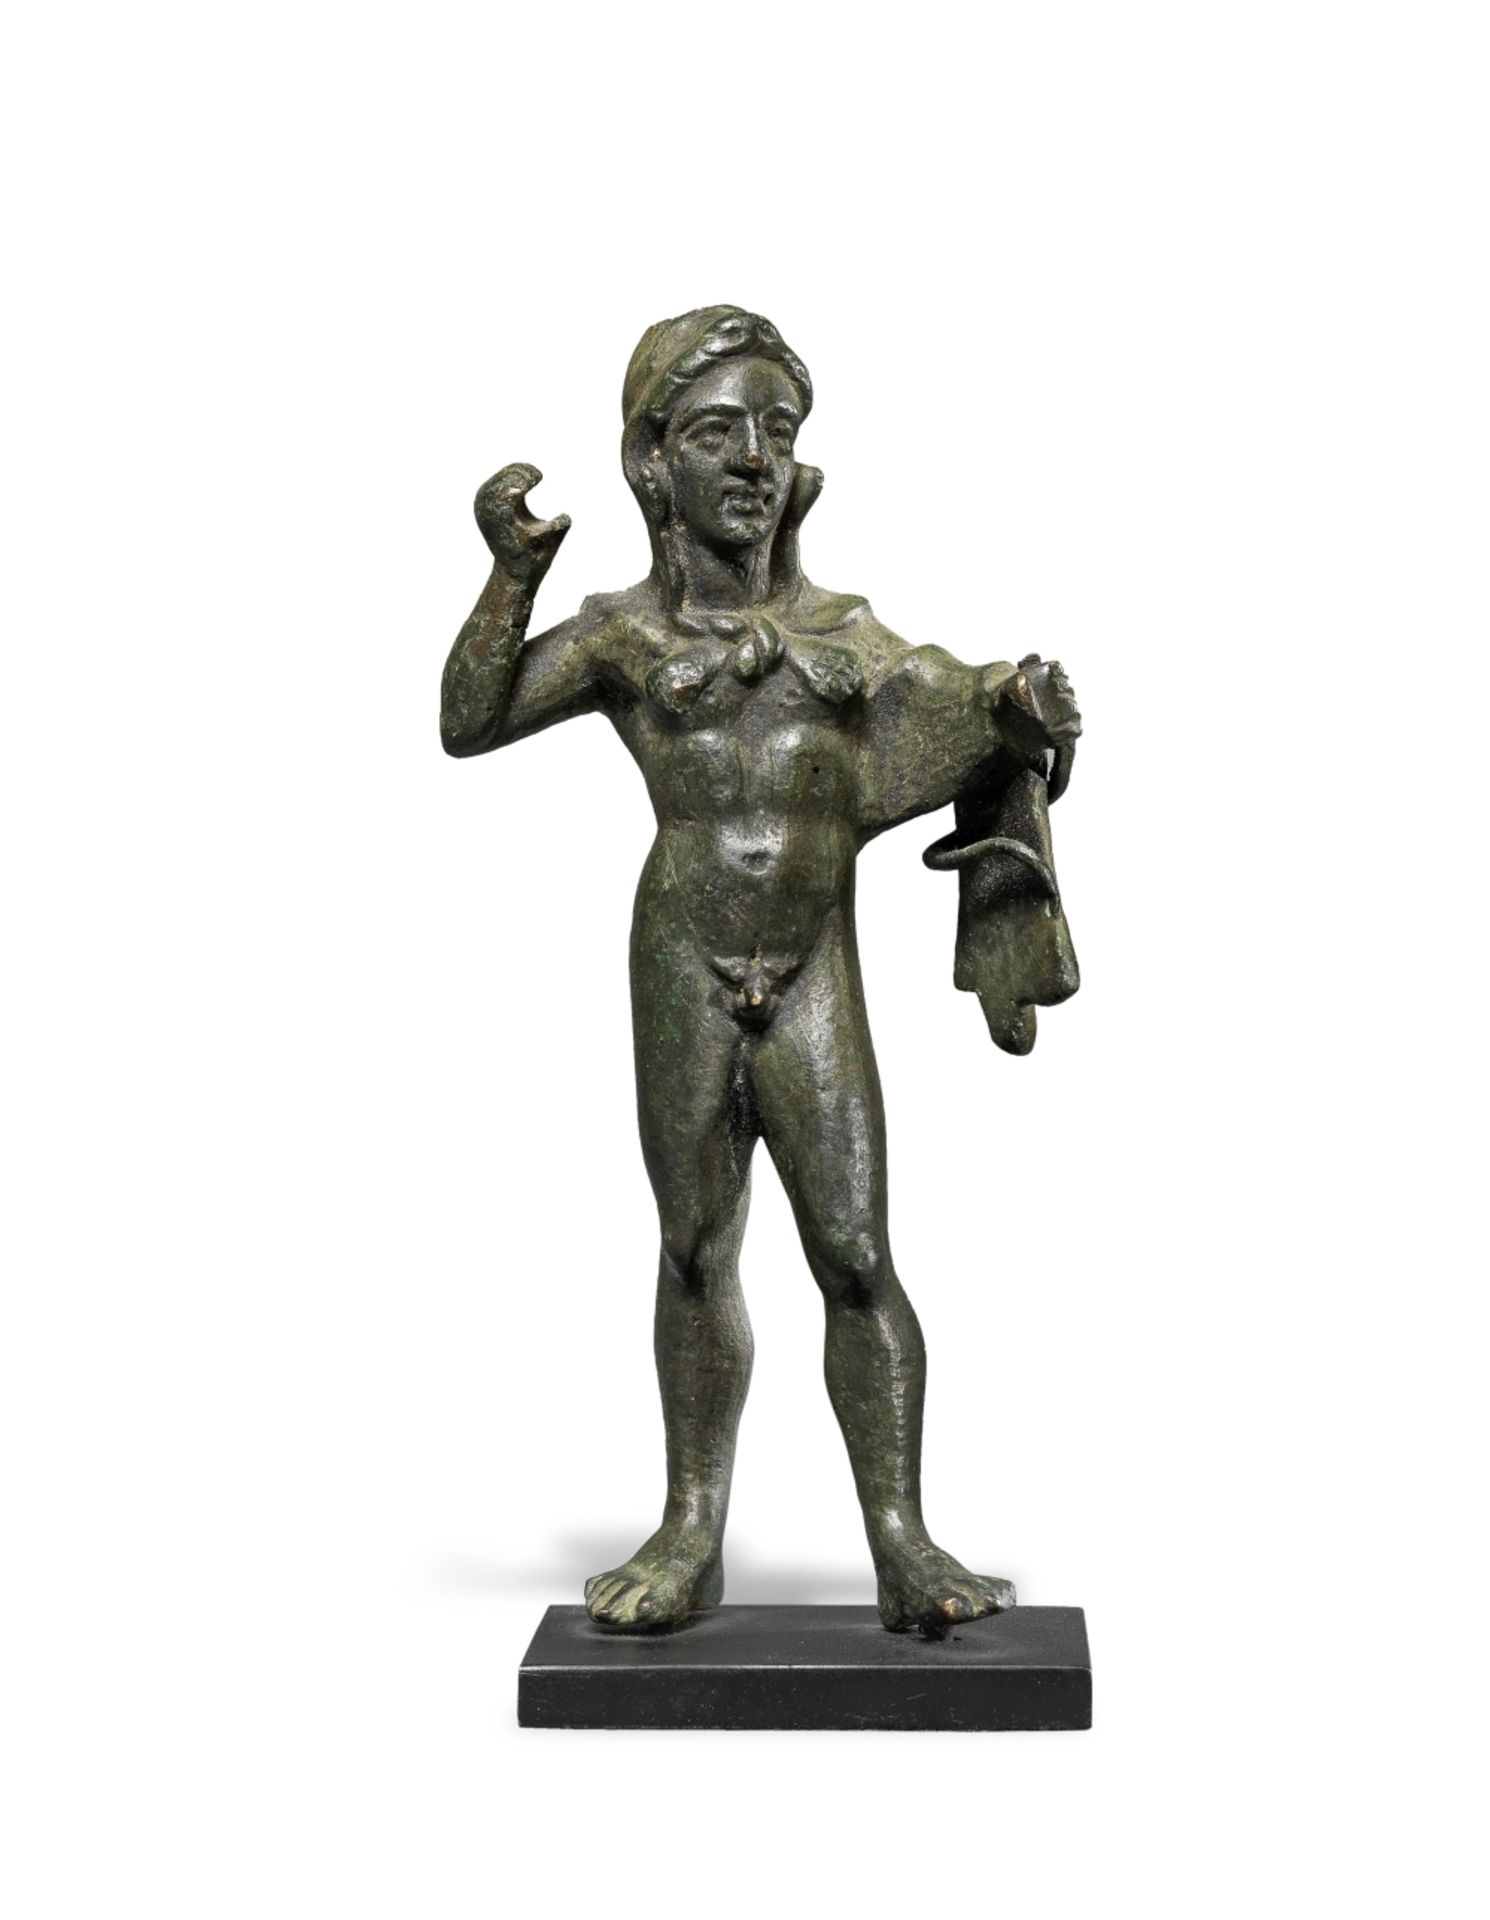 An Etruscan bronze figure of Herakles